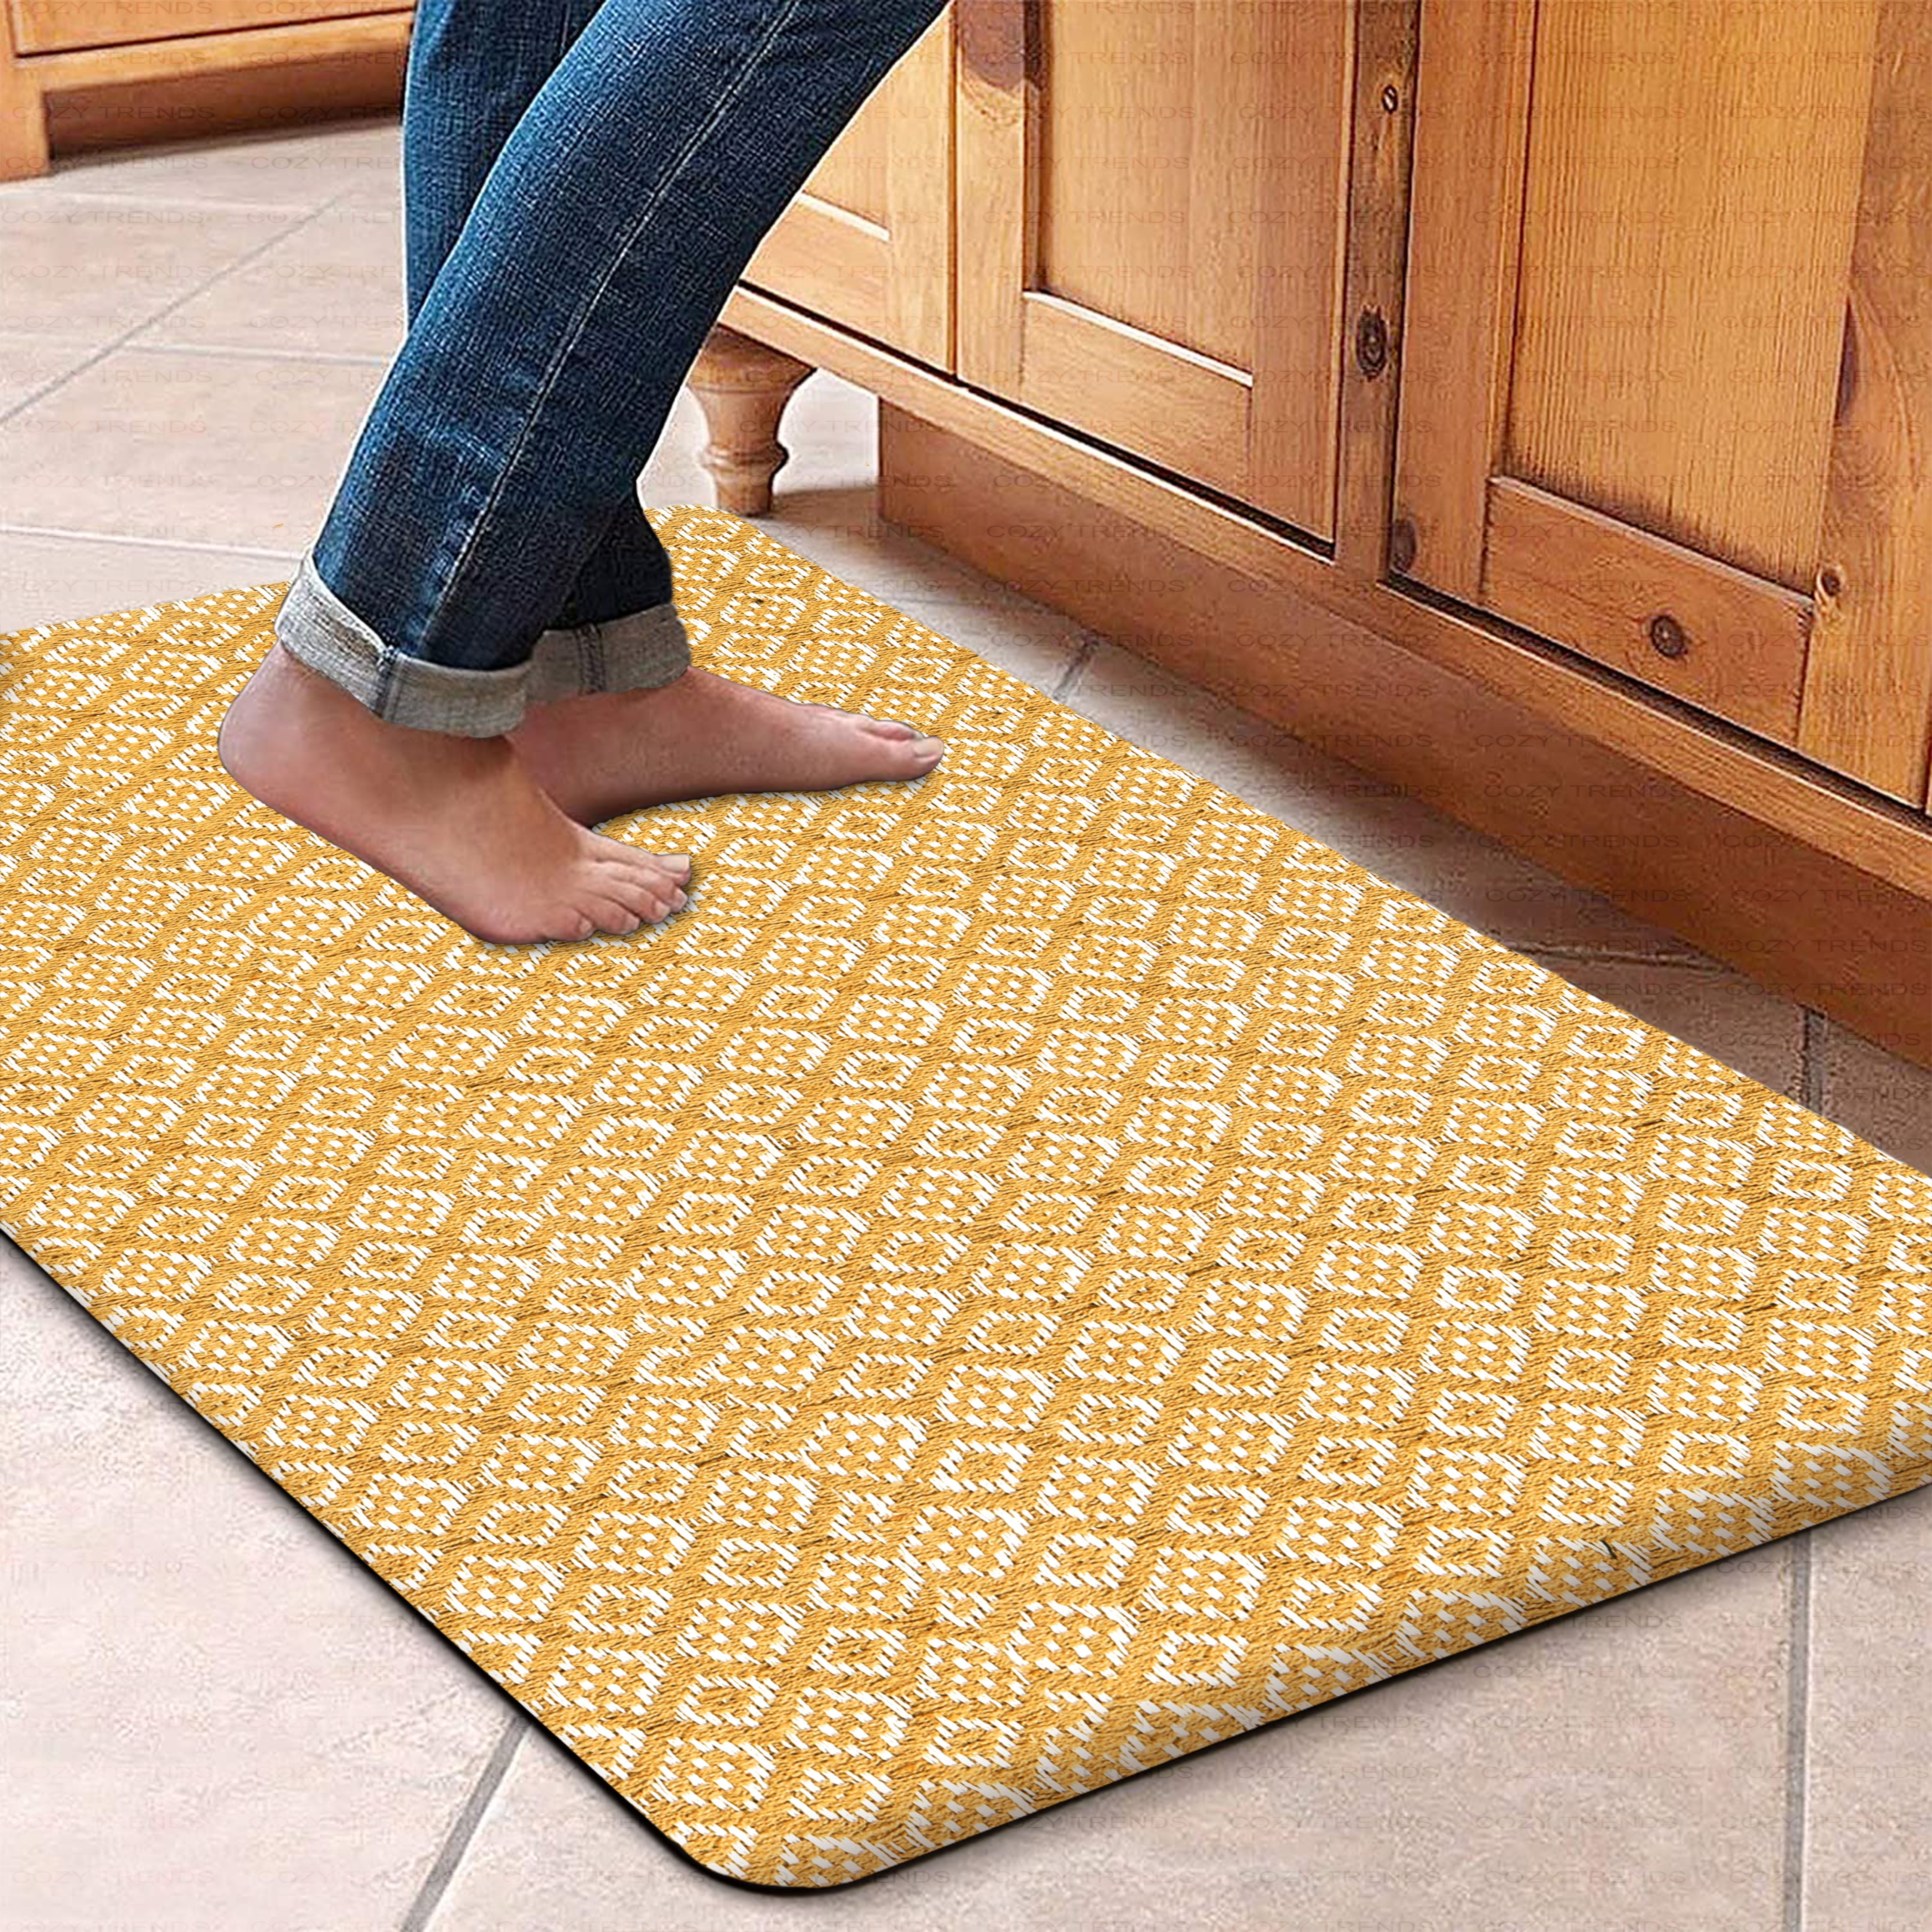 Kitchen Mat, WeGuard 16×24 Anti Fatigue Floor Mat, Waterproof Kitchen  Rugs and Non-Slip Memory Foam Padded Comfort Standing Mat for Kitchen,  Home